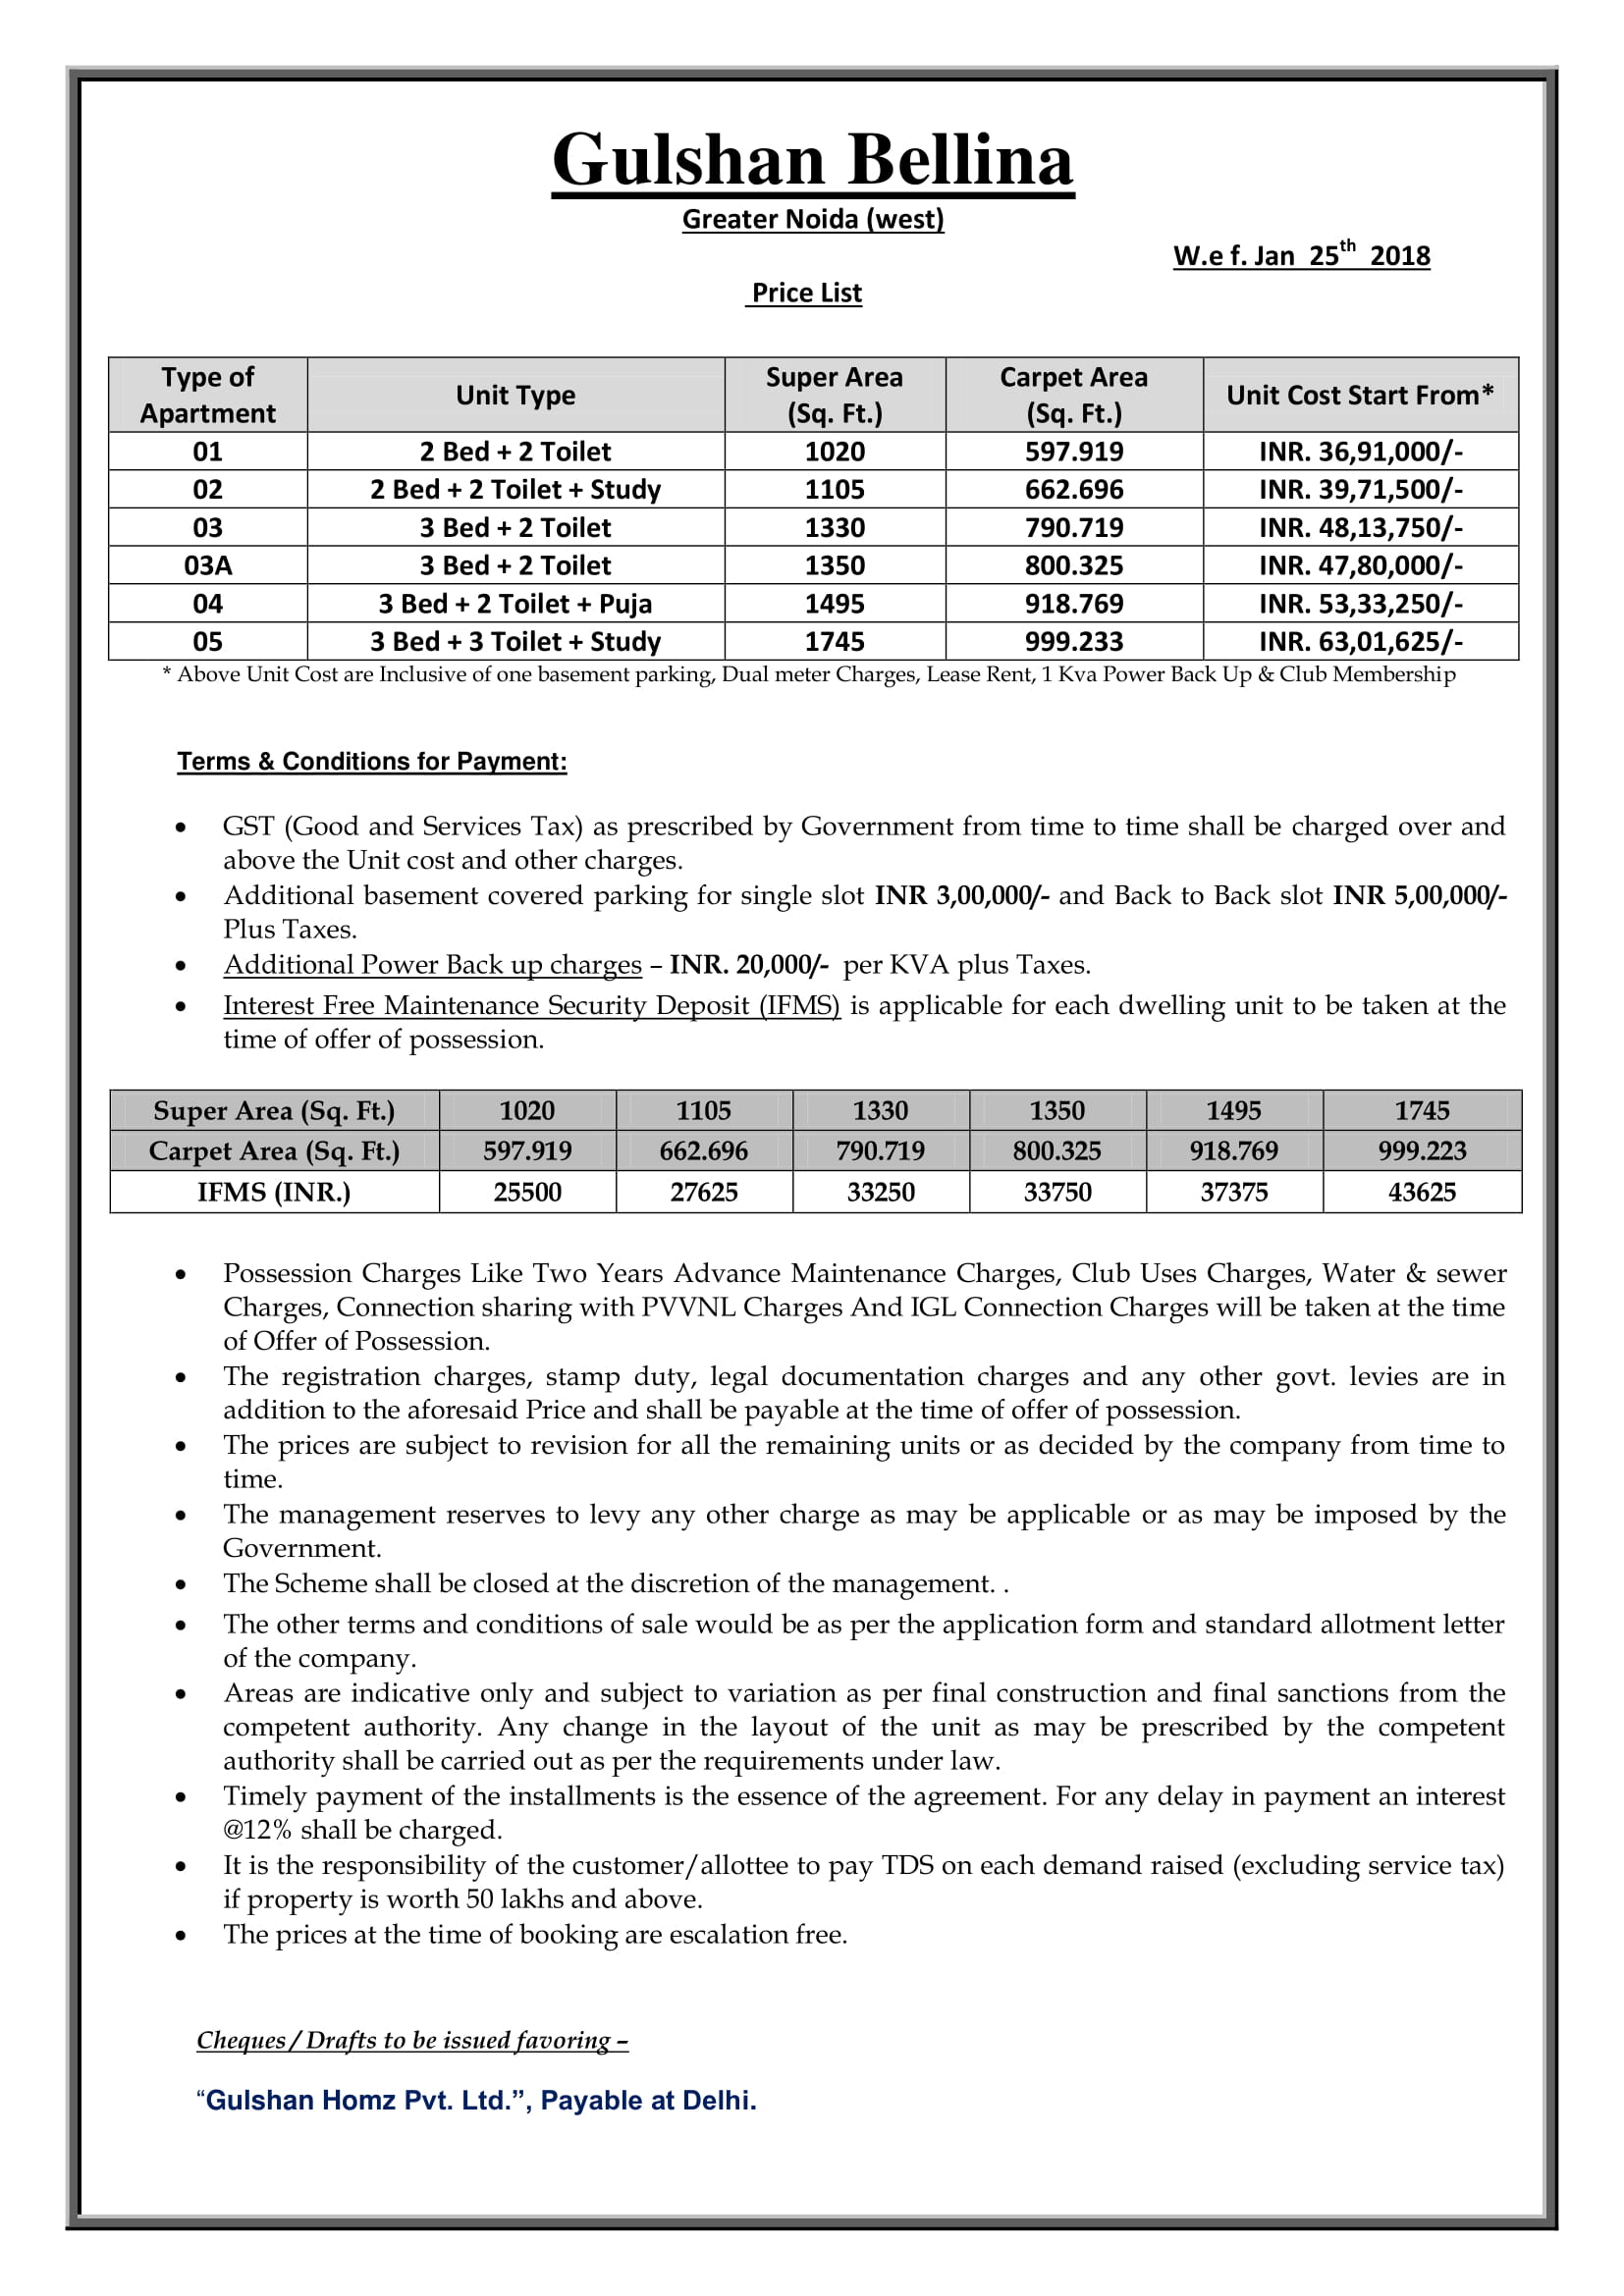 Gulshan Bellina Price List